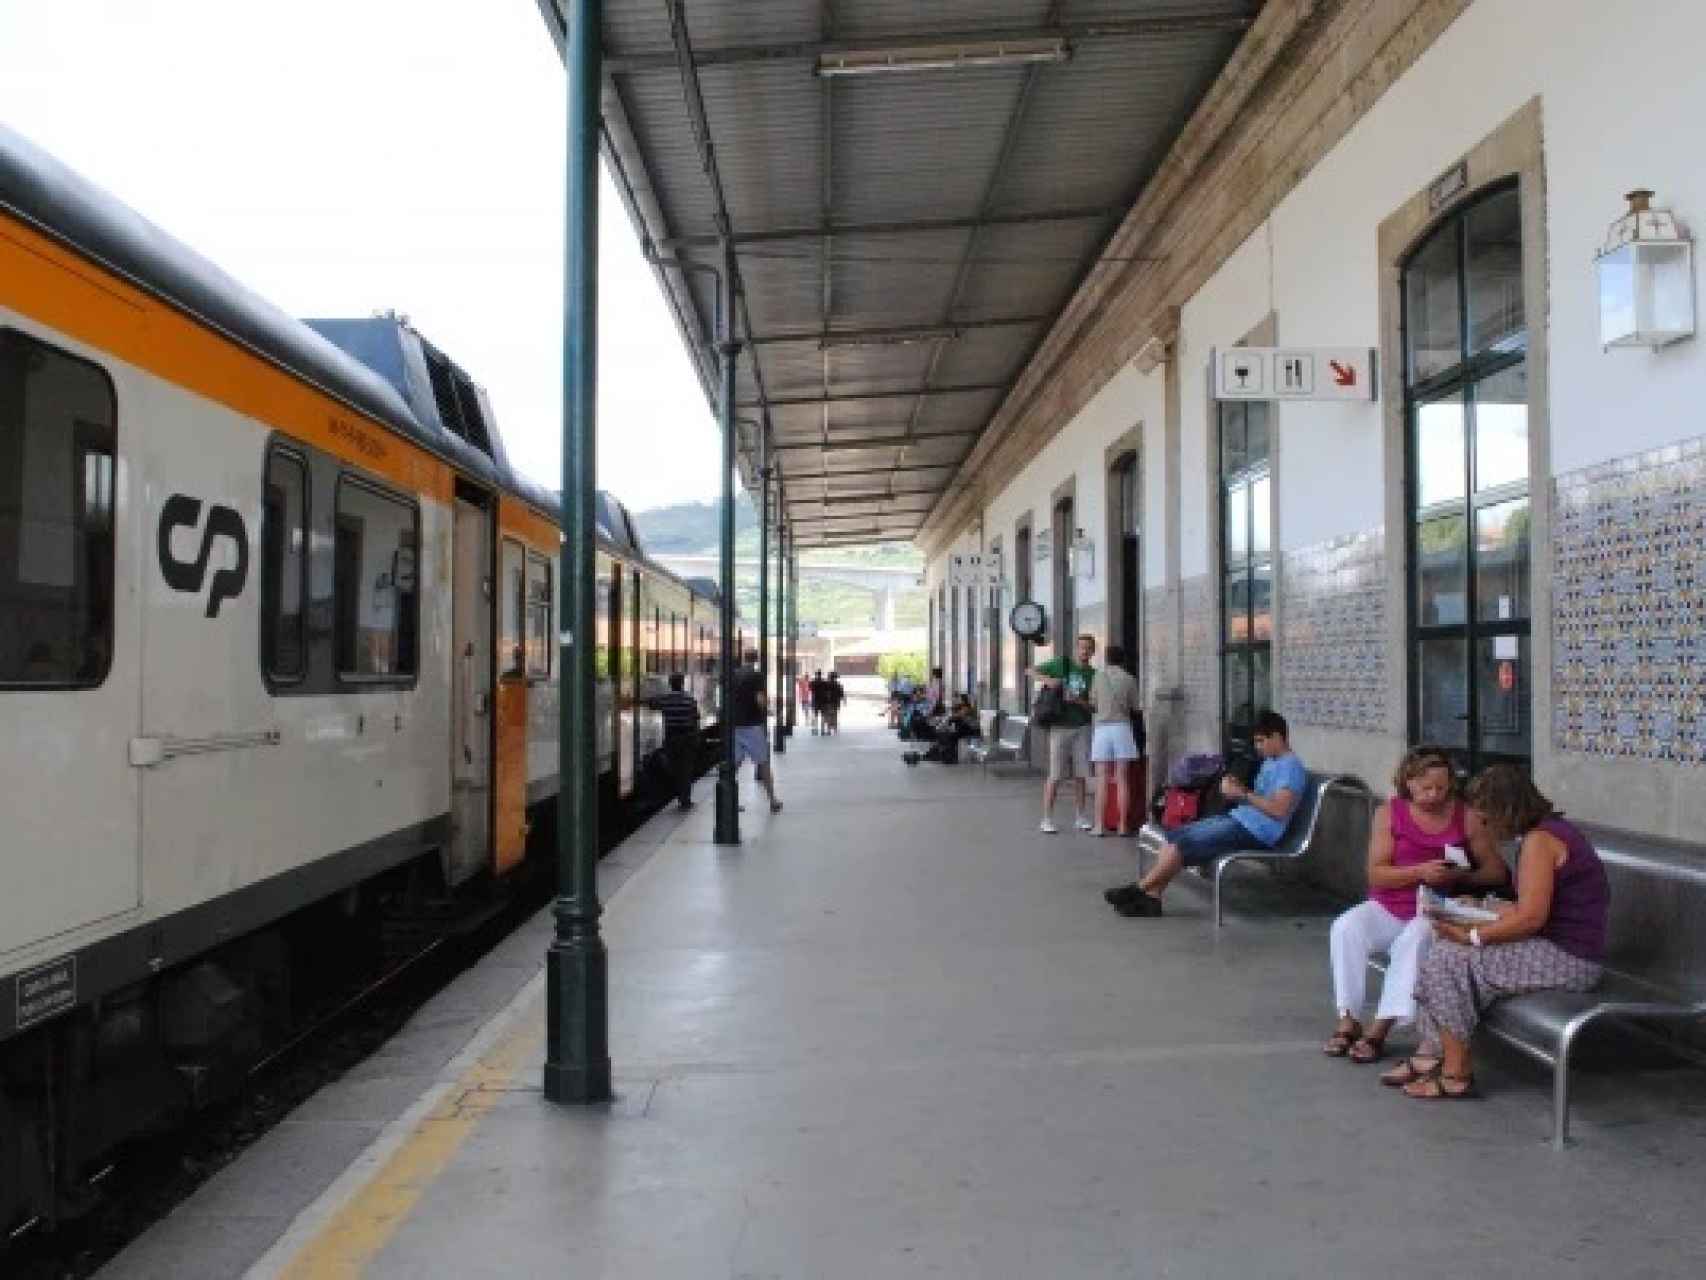 Estación de tren de Pocinho, última en uso